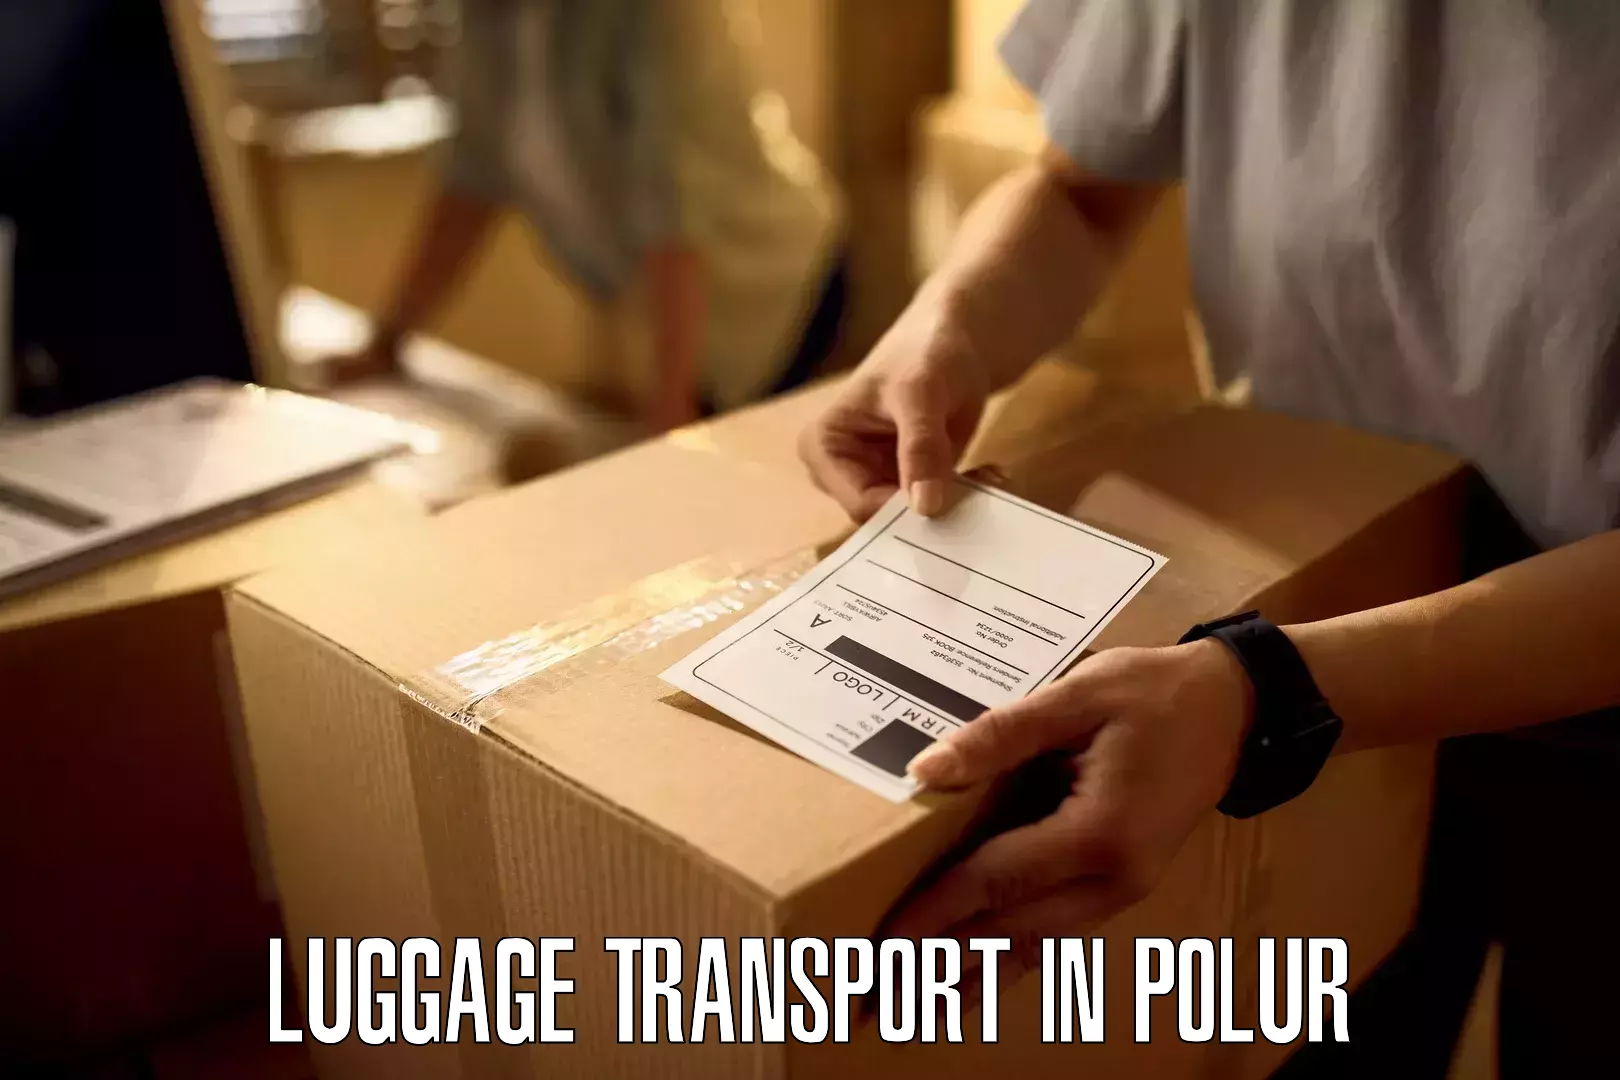 Rural baggage transport in Polur